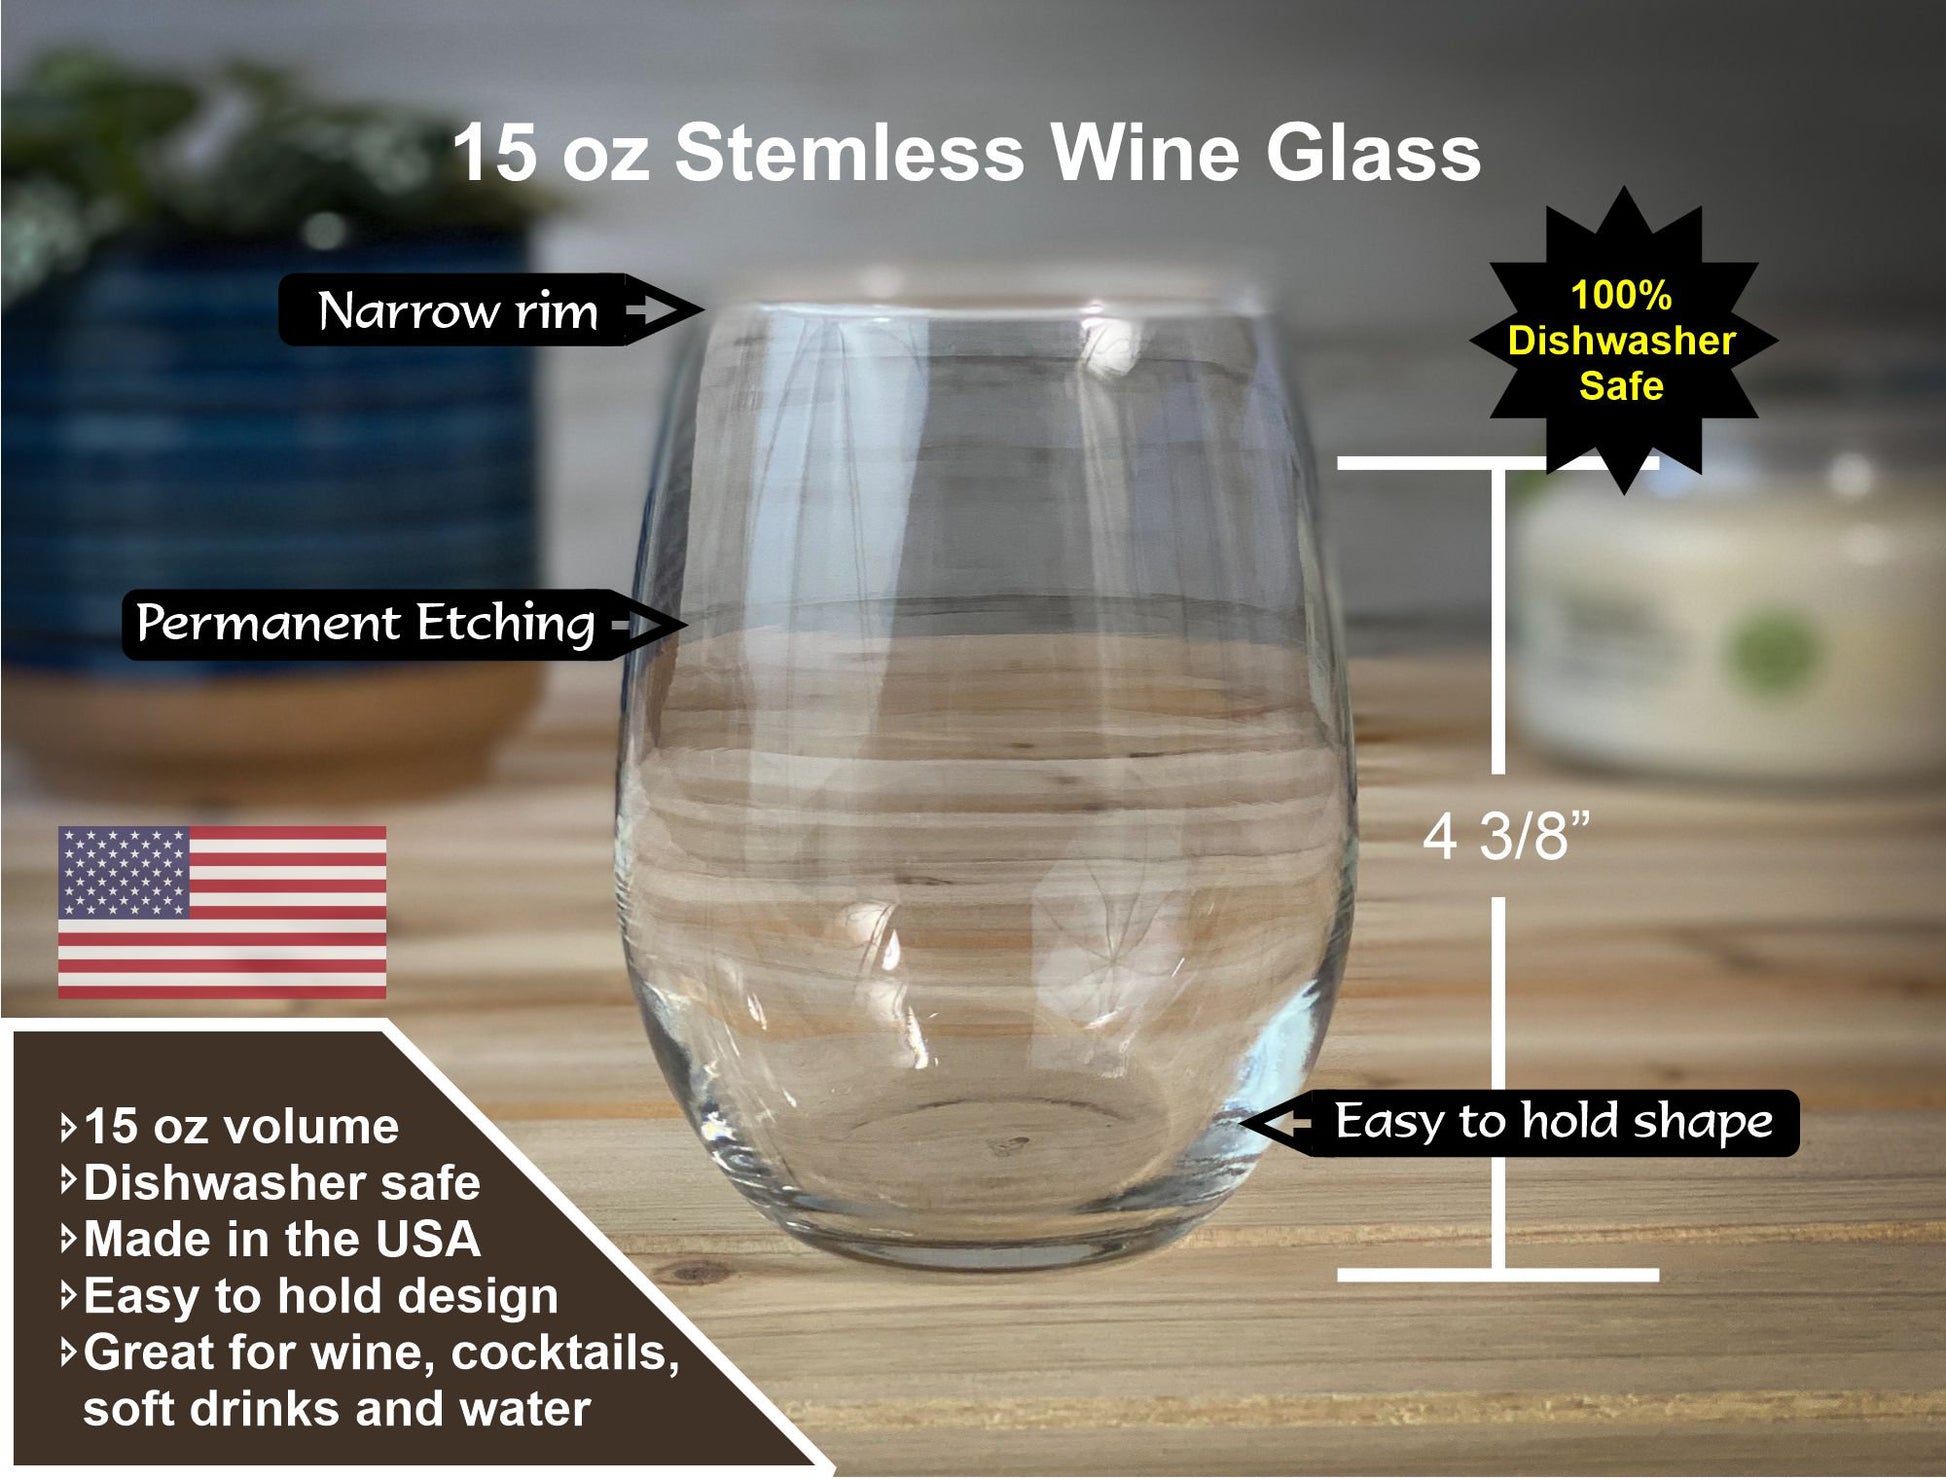 Lewis Smith Lake Alabama - 15 oz Stemless Wine Glass - Lake Life Gift